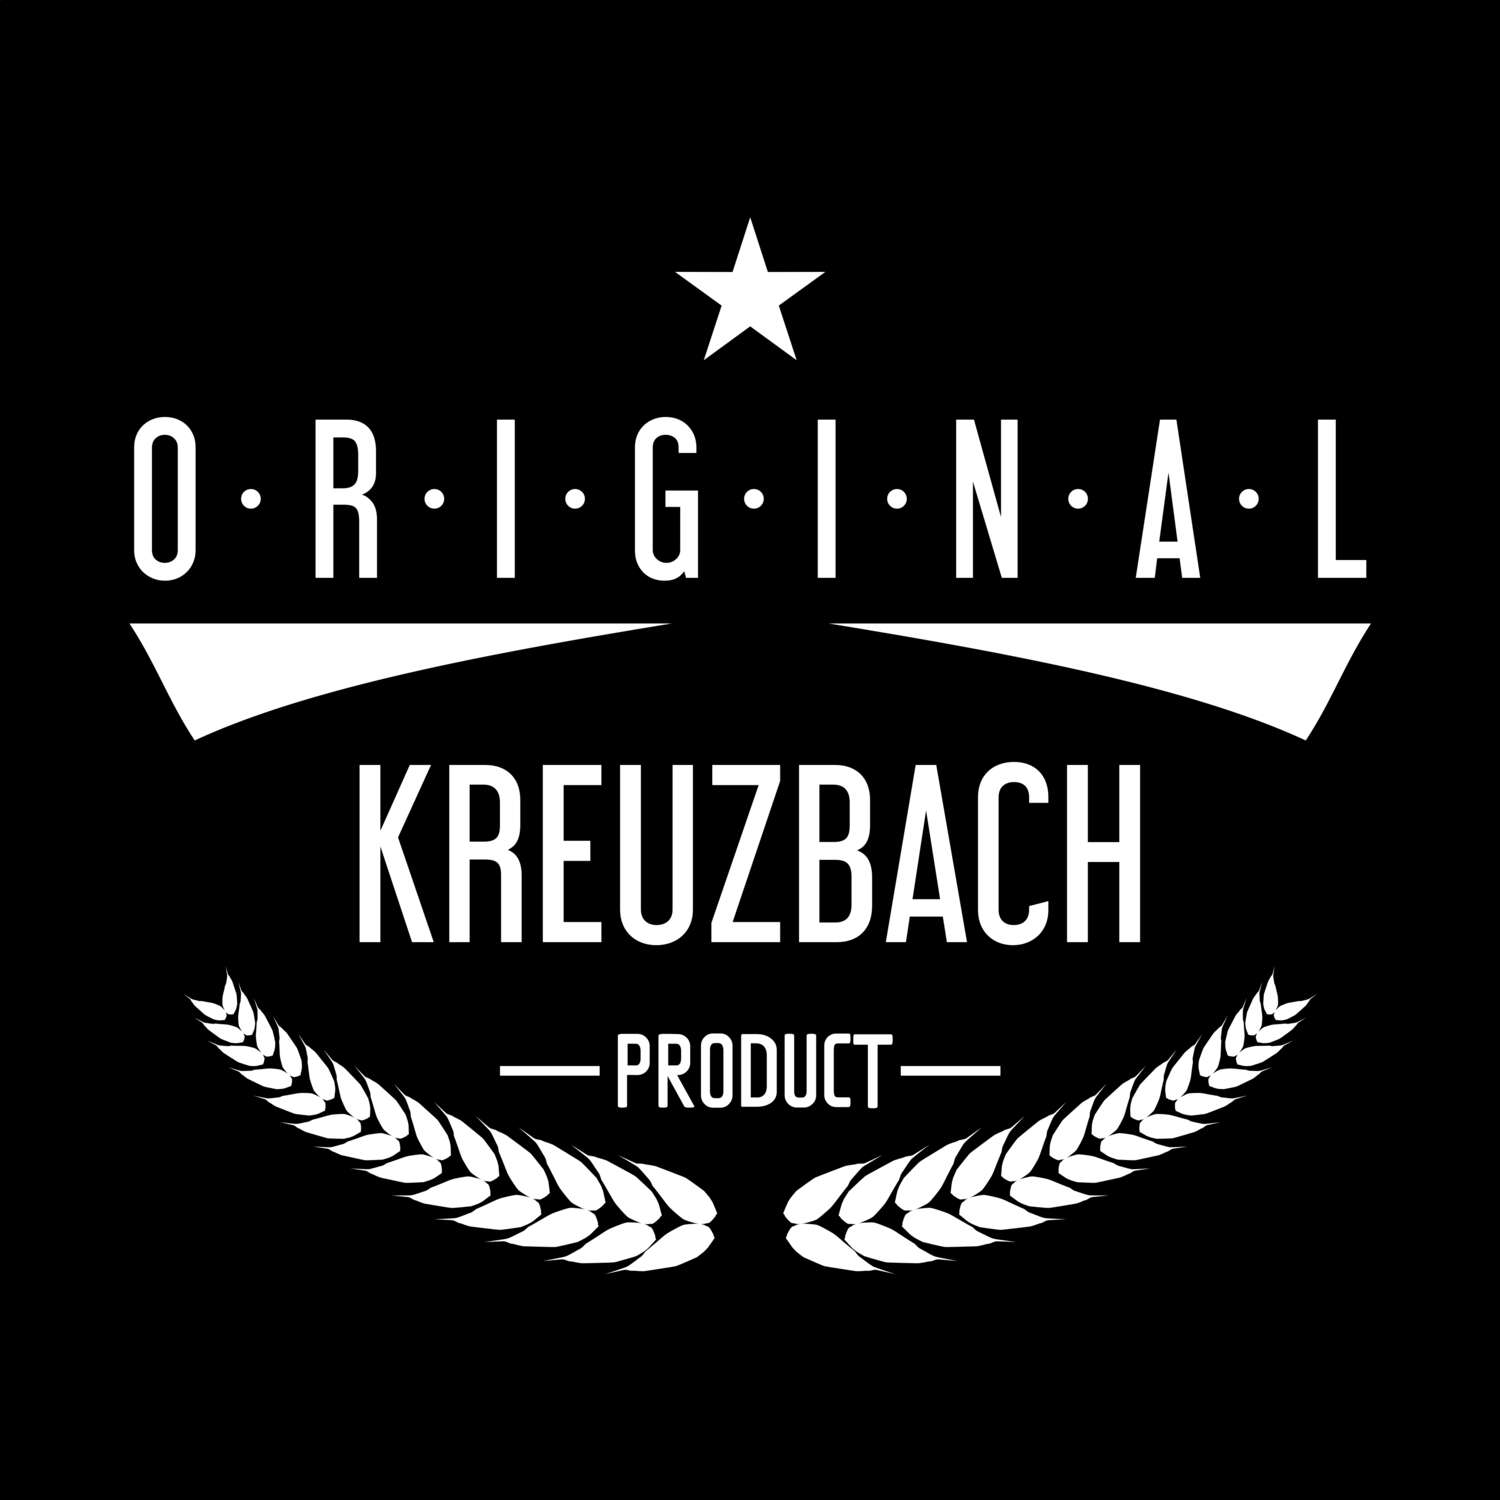 Kreuzbach T-Shirt »Original Product«